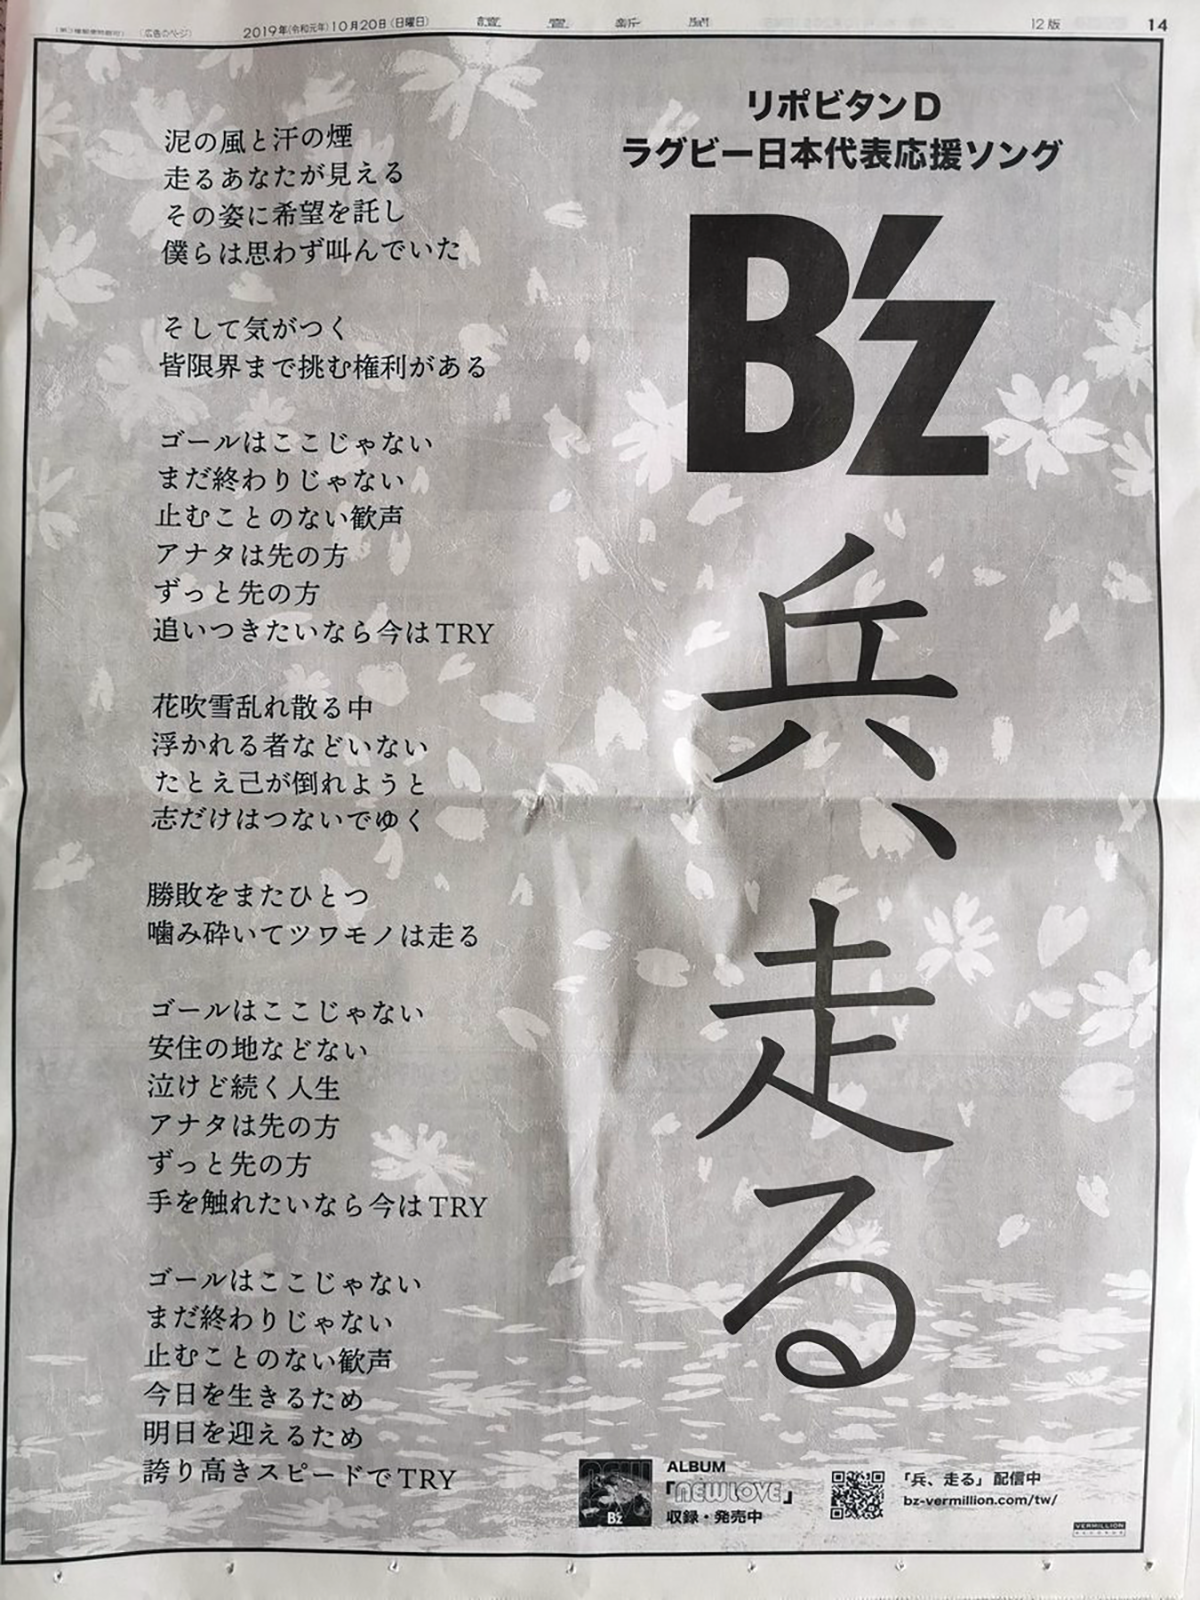 B Z リポビタンd ラグビー日本代表応援ソング 兵 走る の全面広告を読売新聞朝刊に掲載 超 ウルトラ 速報